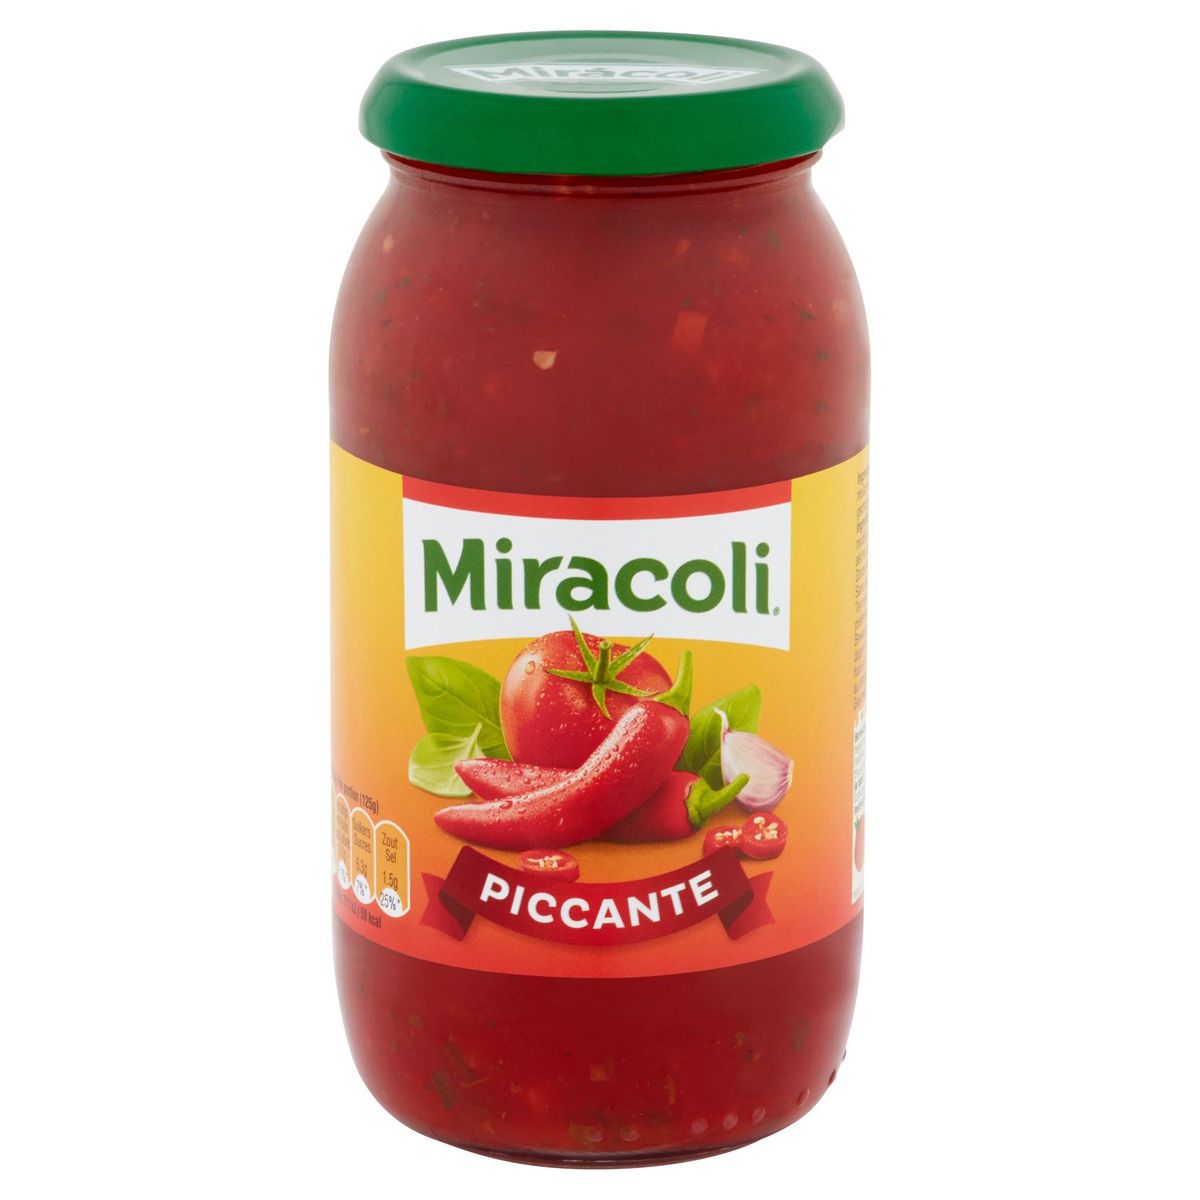 Miracoli Sauce Piccante 500 g